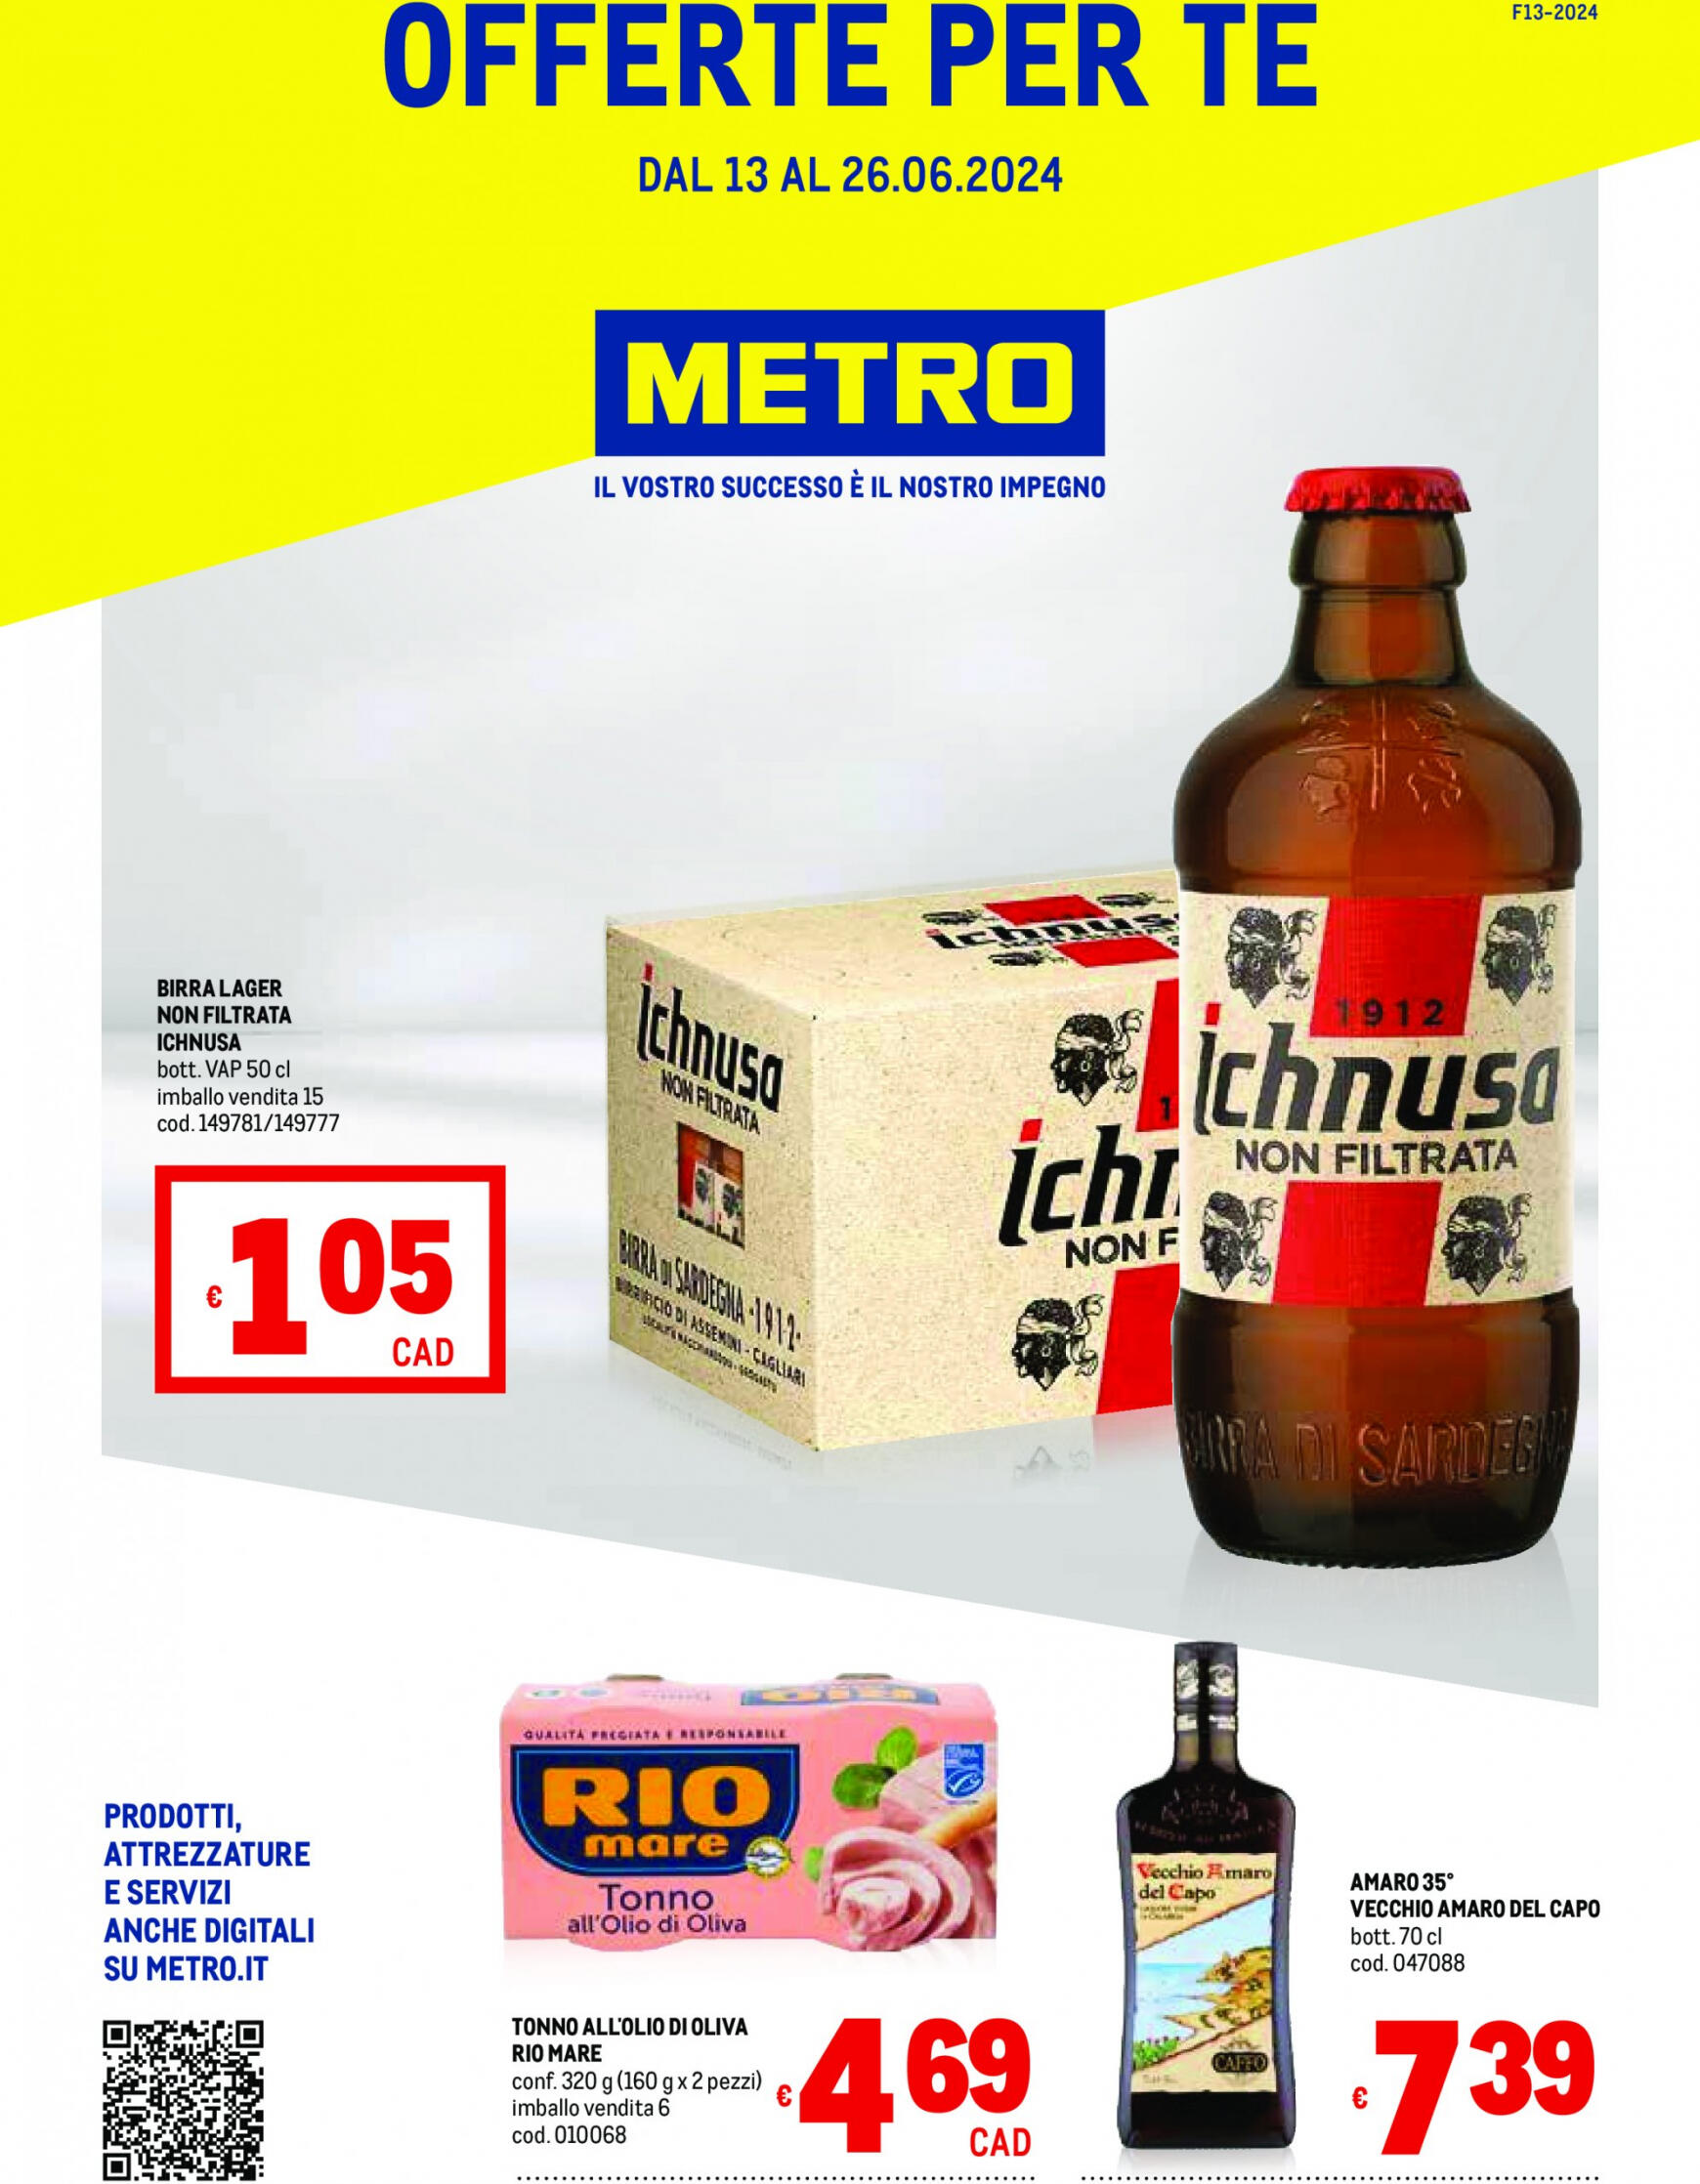 metro - Nuovo volantino Metro - Offerte per te 13.06. - 26.06. - page: 1